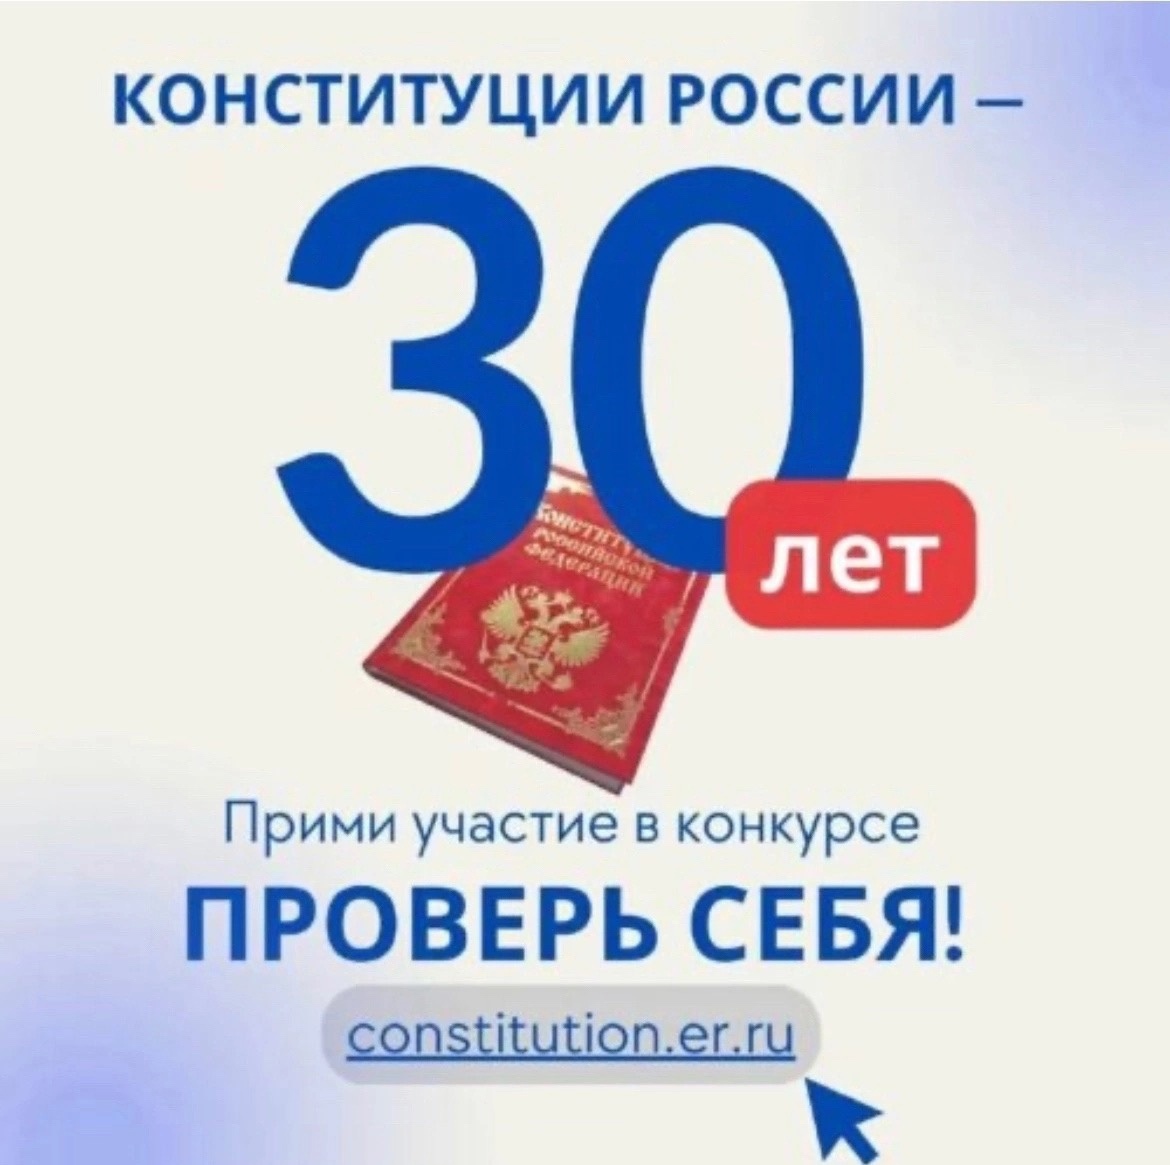 До 25 ноября в регионе проходит конкурс на знание Конституции.